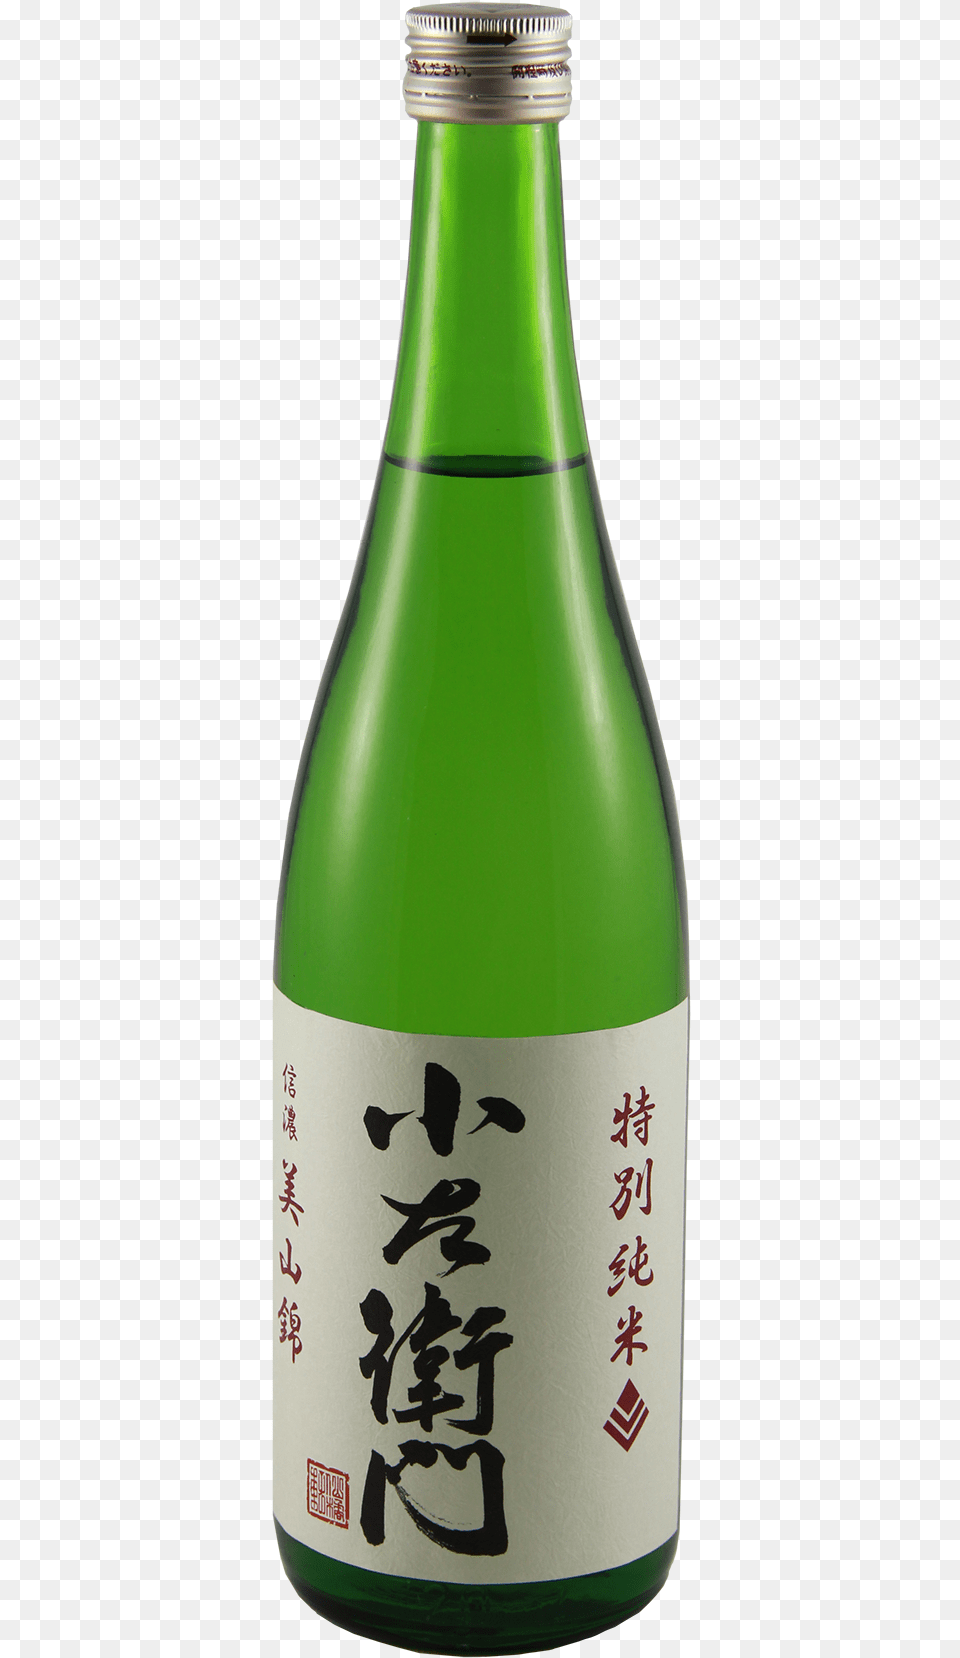 Kozaemon Shinano Miyama Nishiki Tokubetsu Junmai Sake Glass Bottle, Alcohol, Beverage, Beer Free Transparent Png